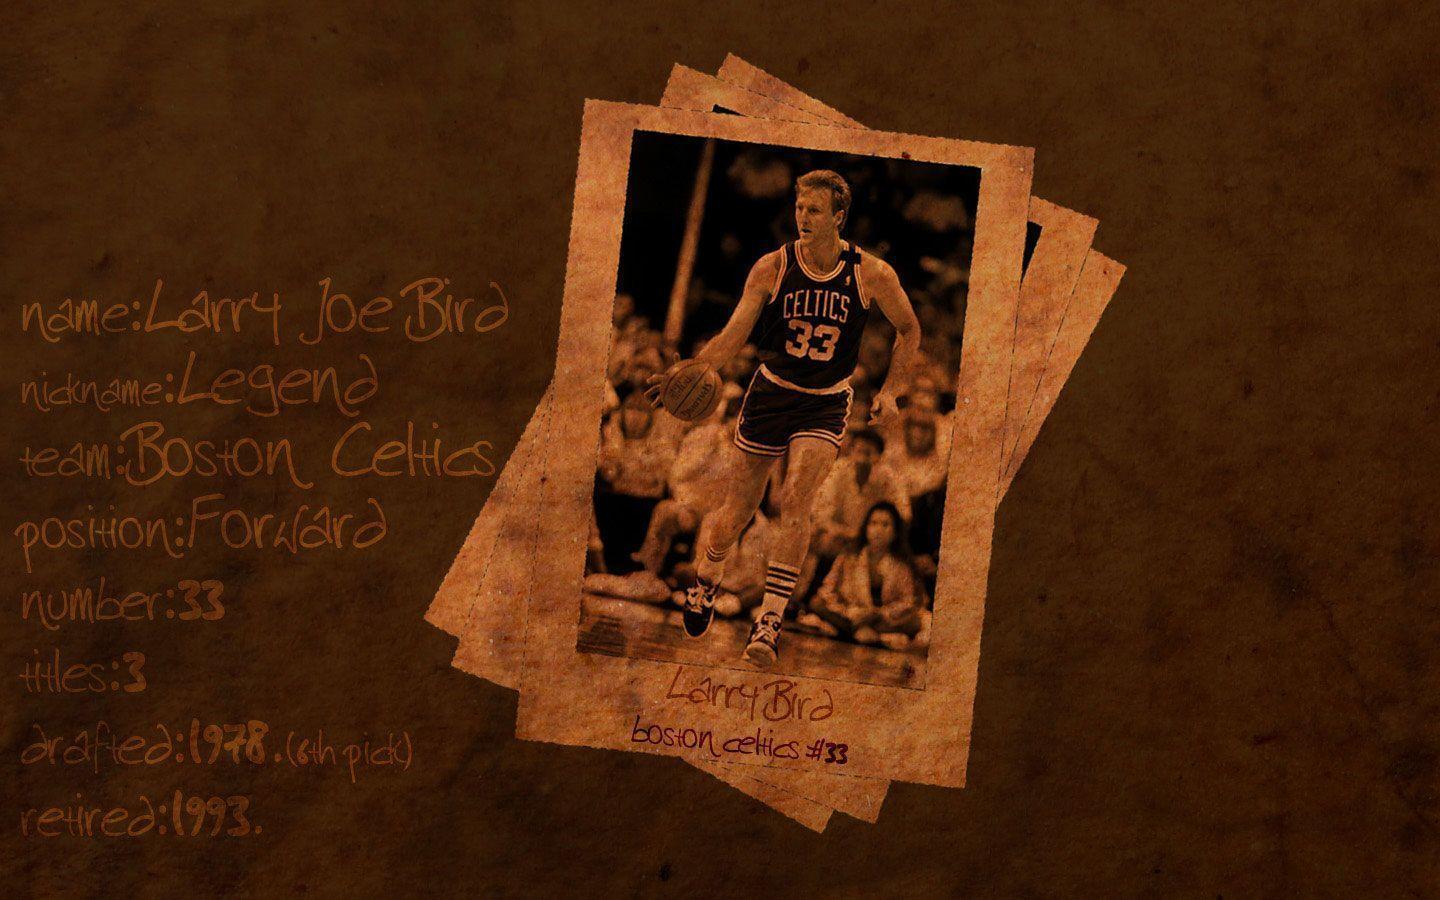 Larry Bird Career Bio Wallpaper. Basketball Wallpaper at